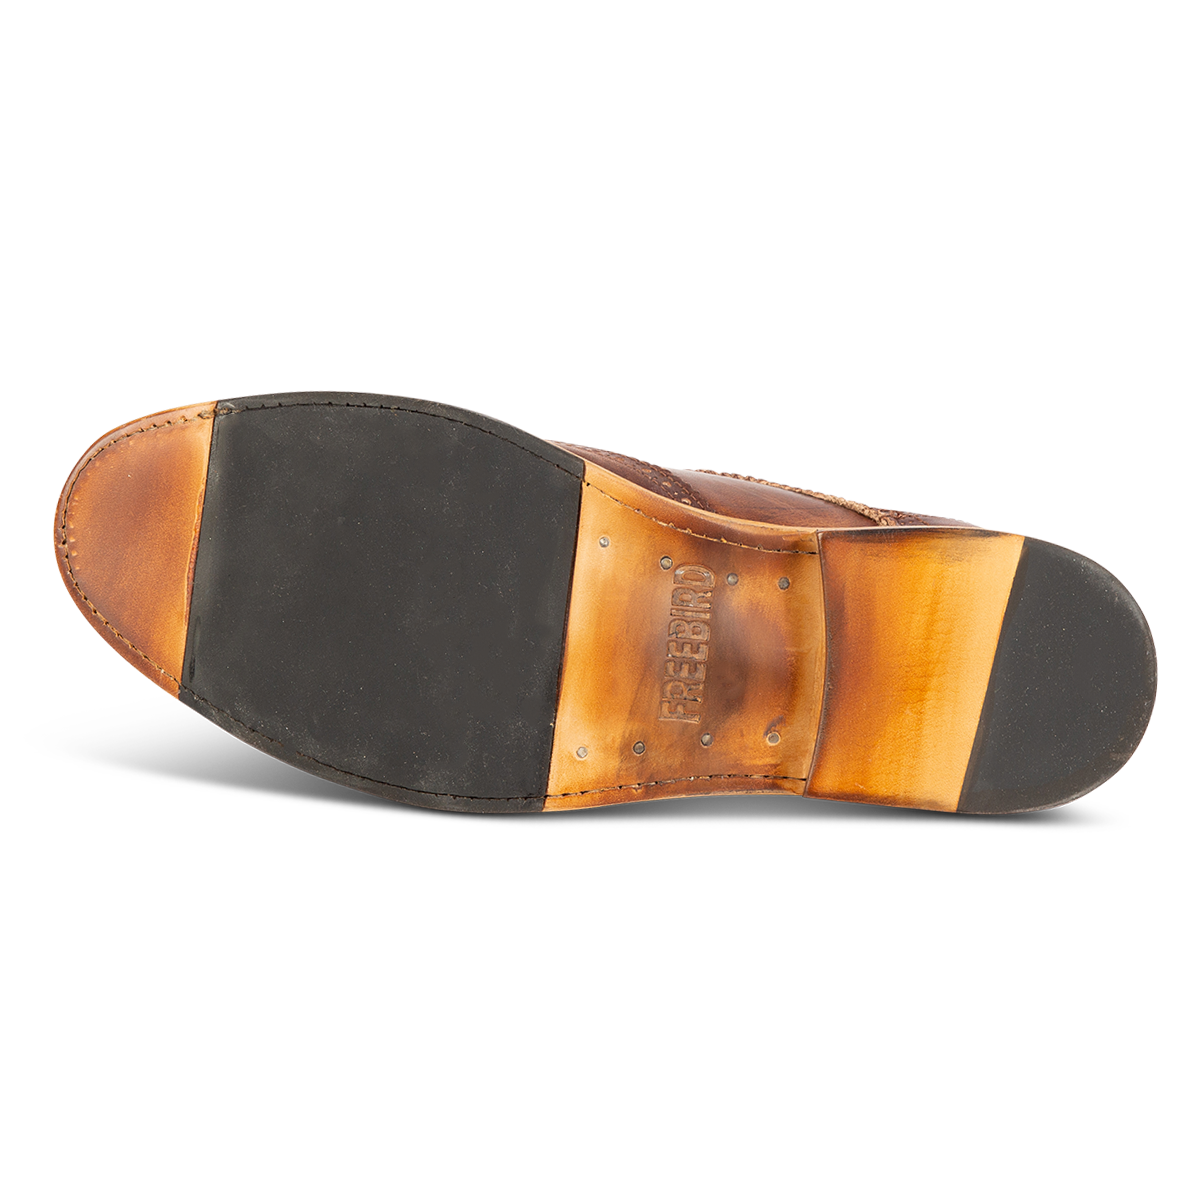 Leather sole imprinted with FREEBIRD on men's Kensington cognac shoe